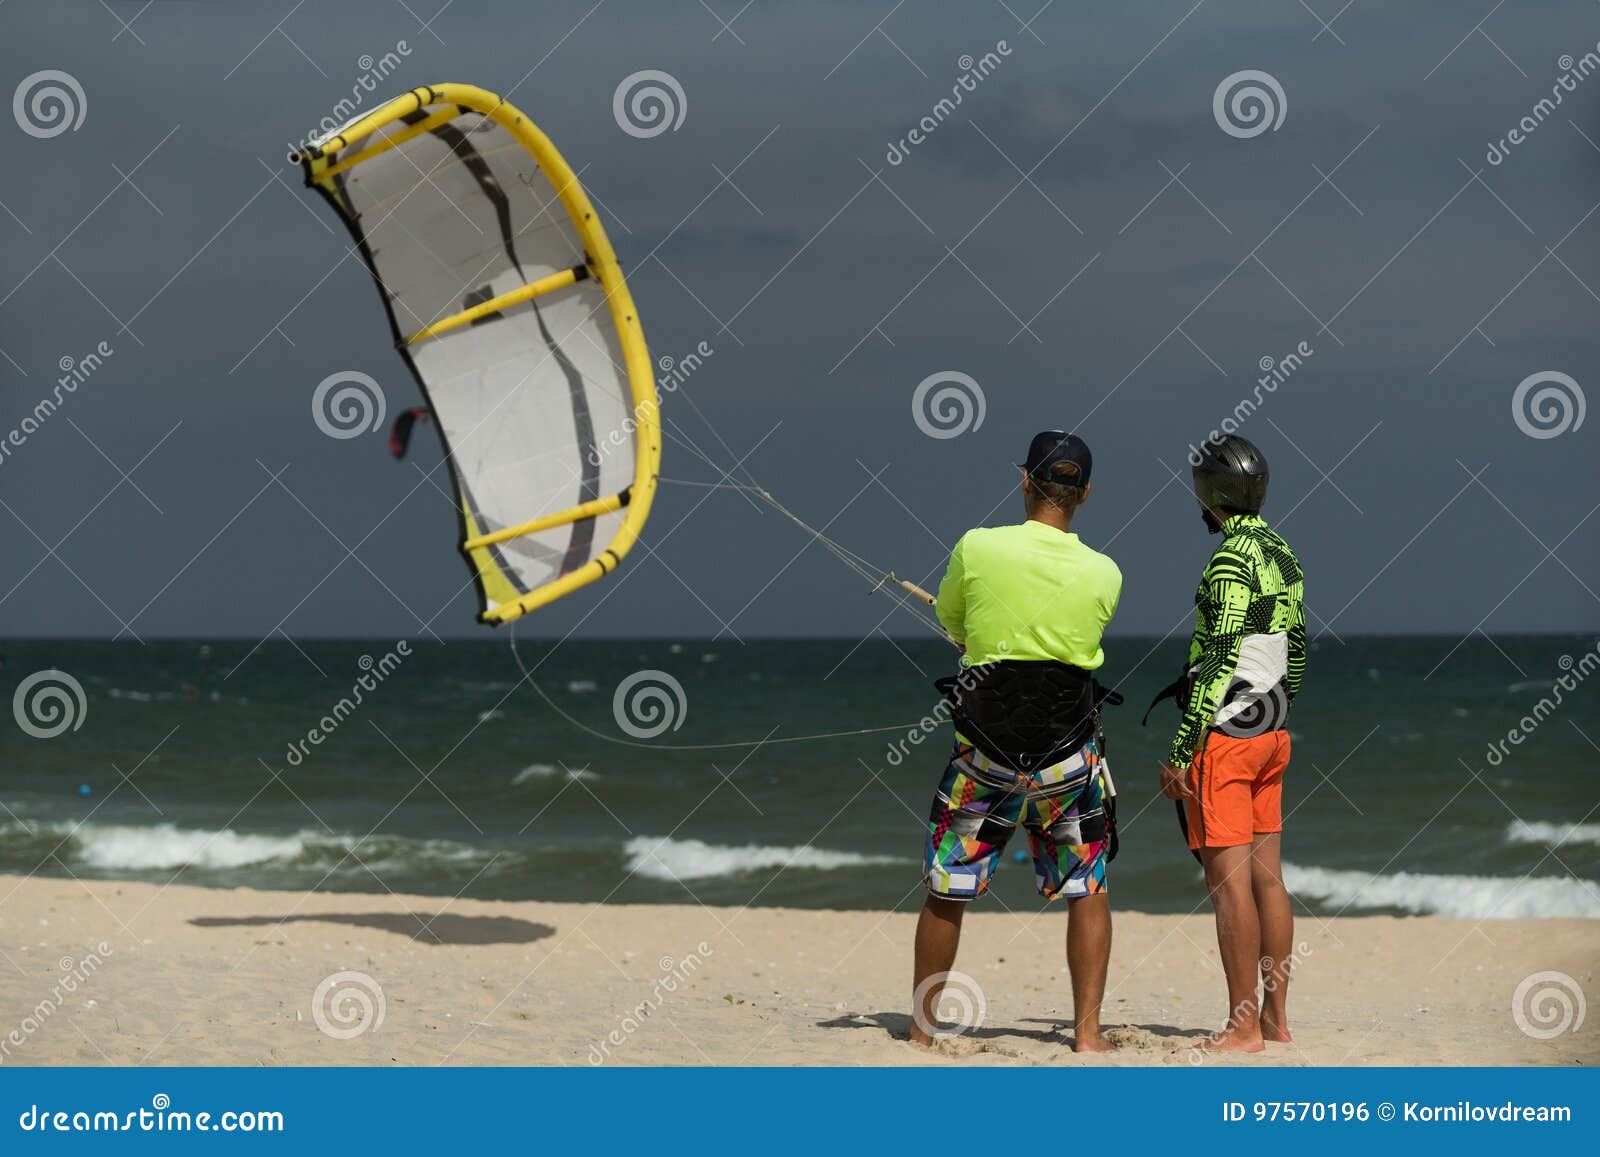 kitesurfing instruction.